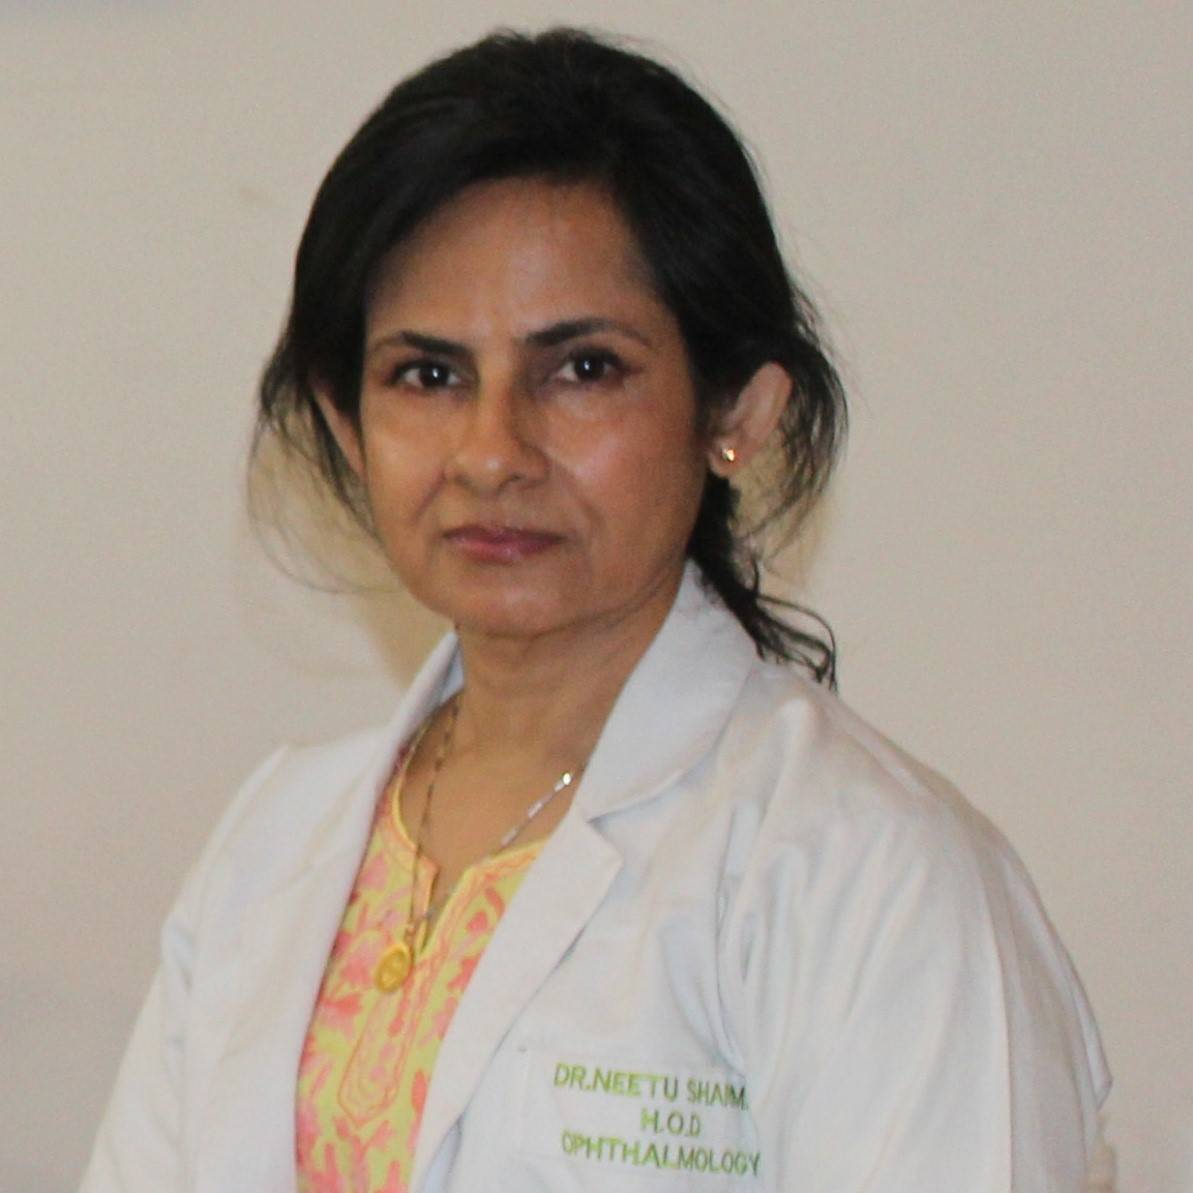 Dr. Neetu Sharma Ophthalmology Fortis Hospital, Noida